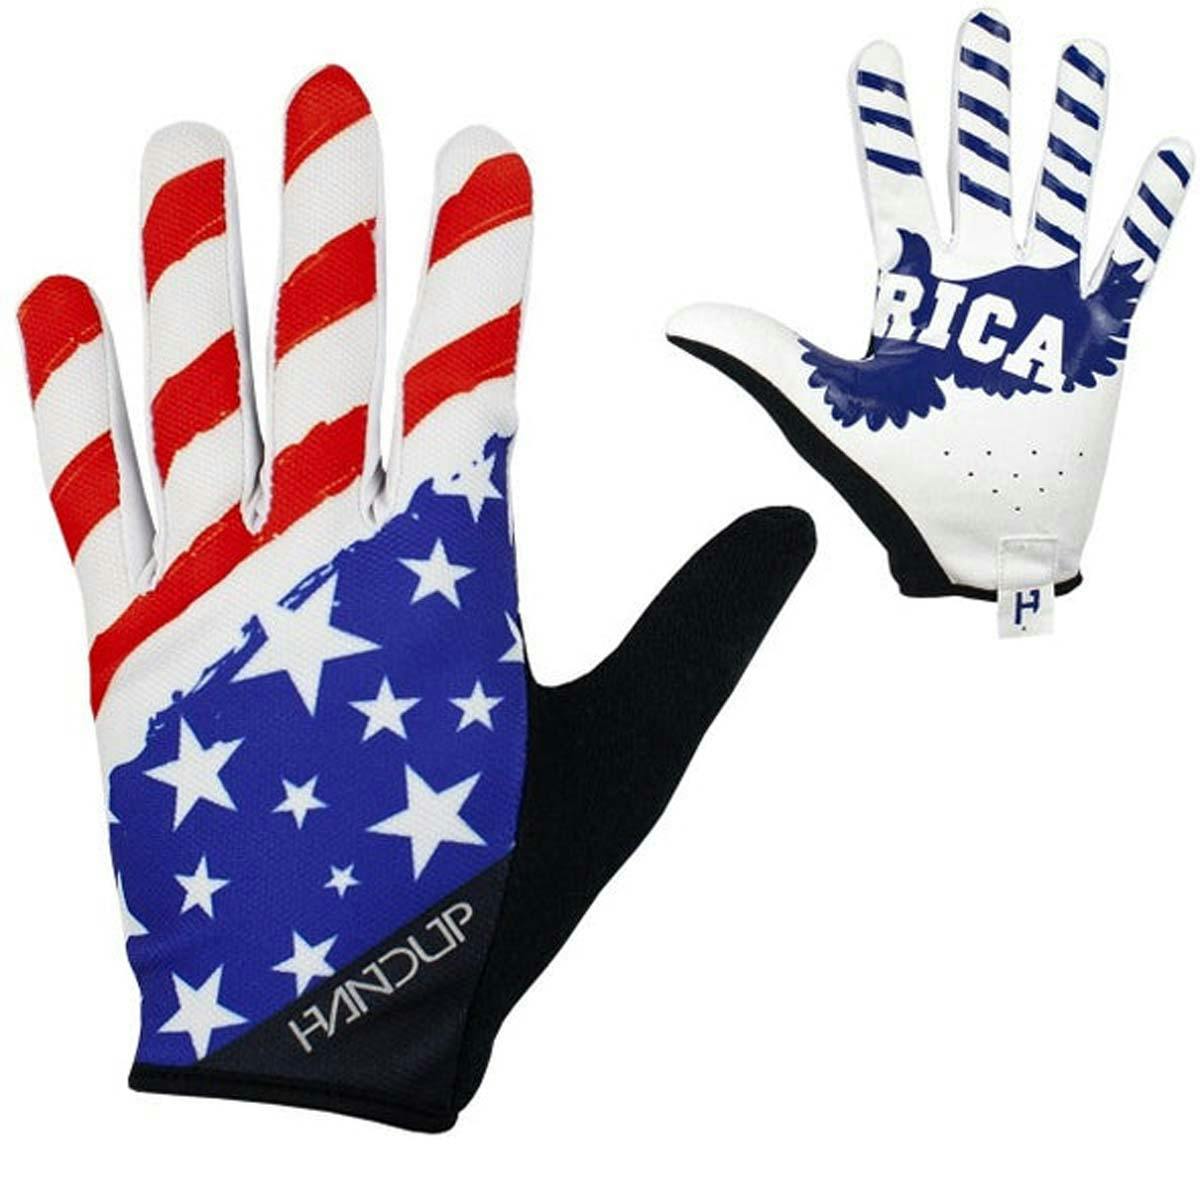 HandUp Gloves - Original 'MERICAS - MERICAS - XL